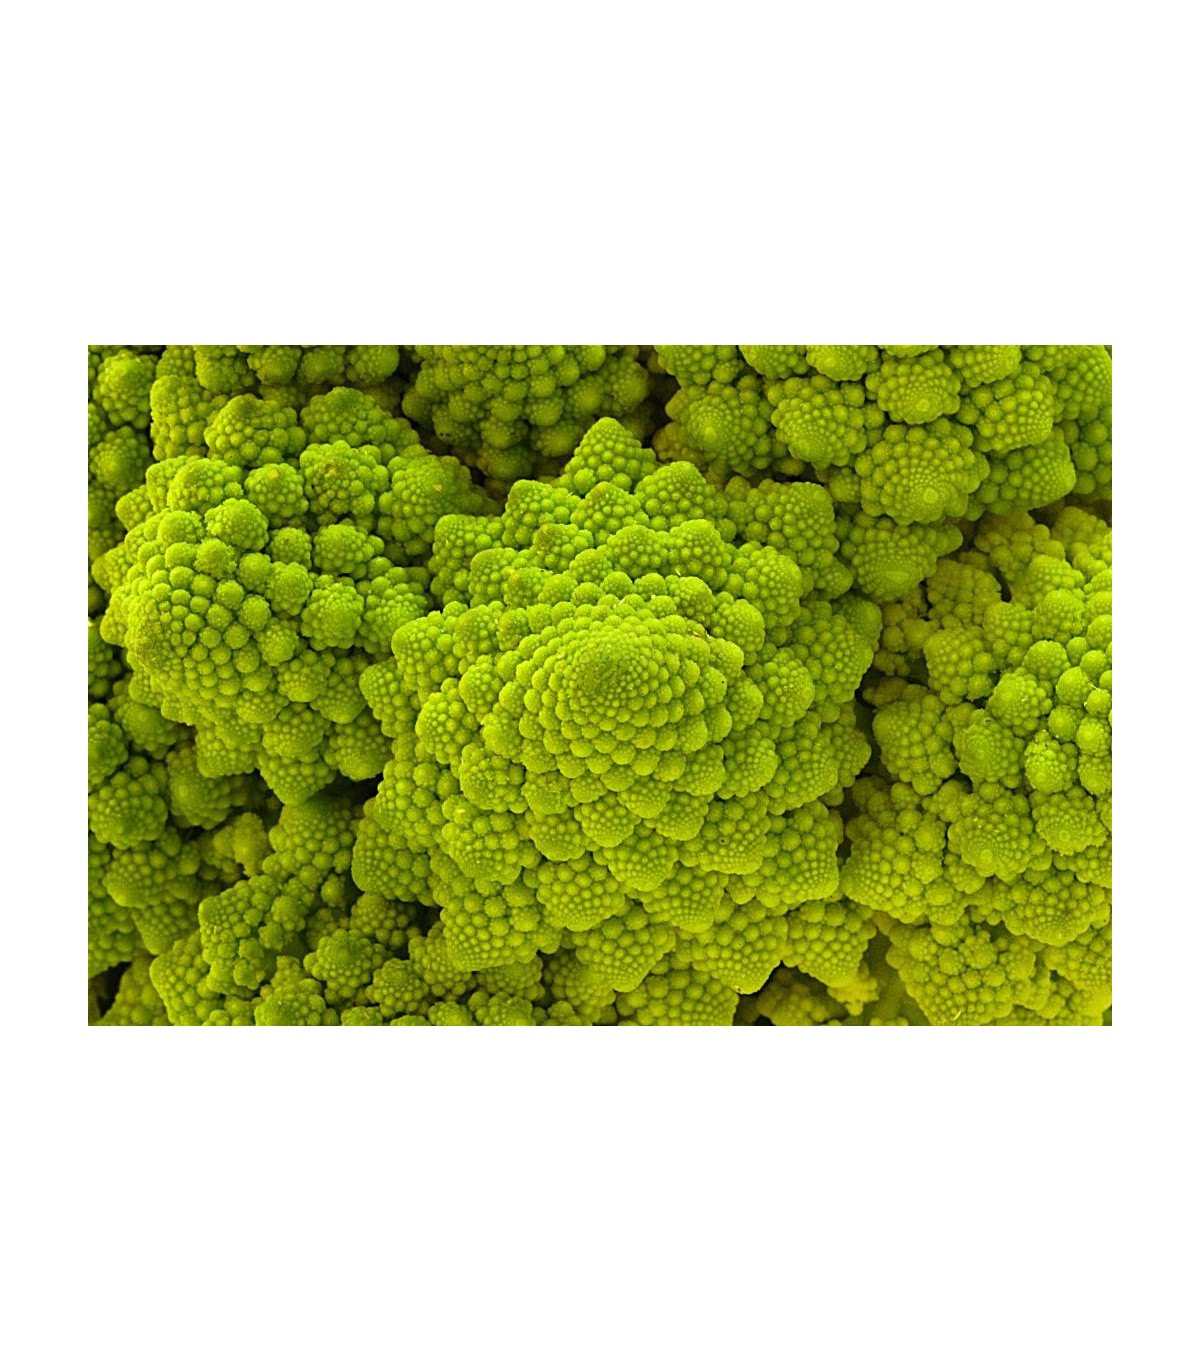 Karfiol neskorý Romanesco - semená Karfiolu - Brassica oleracea botrytis - 20 ks 